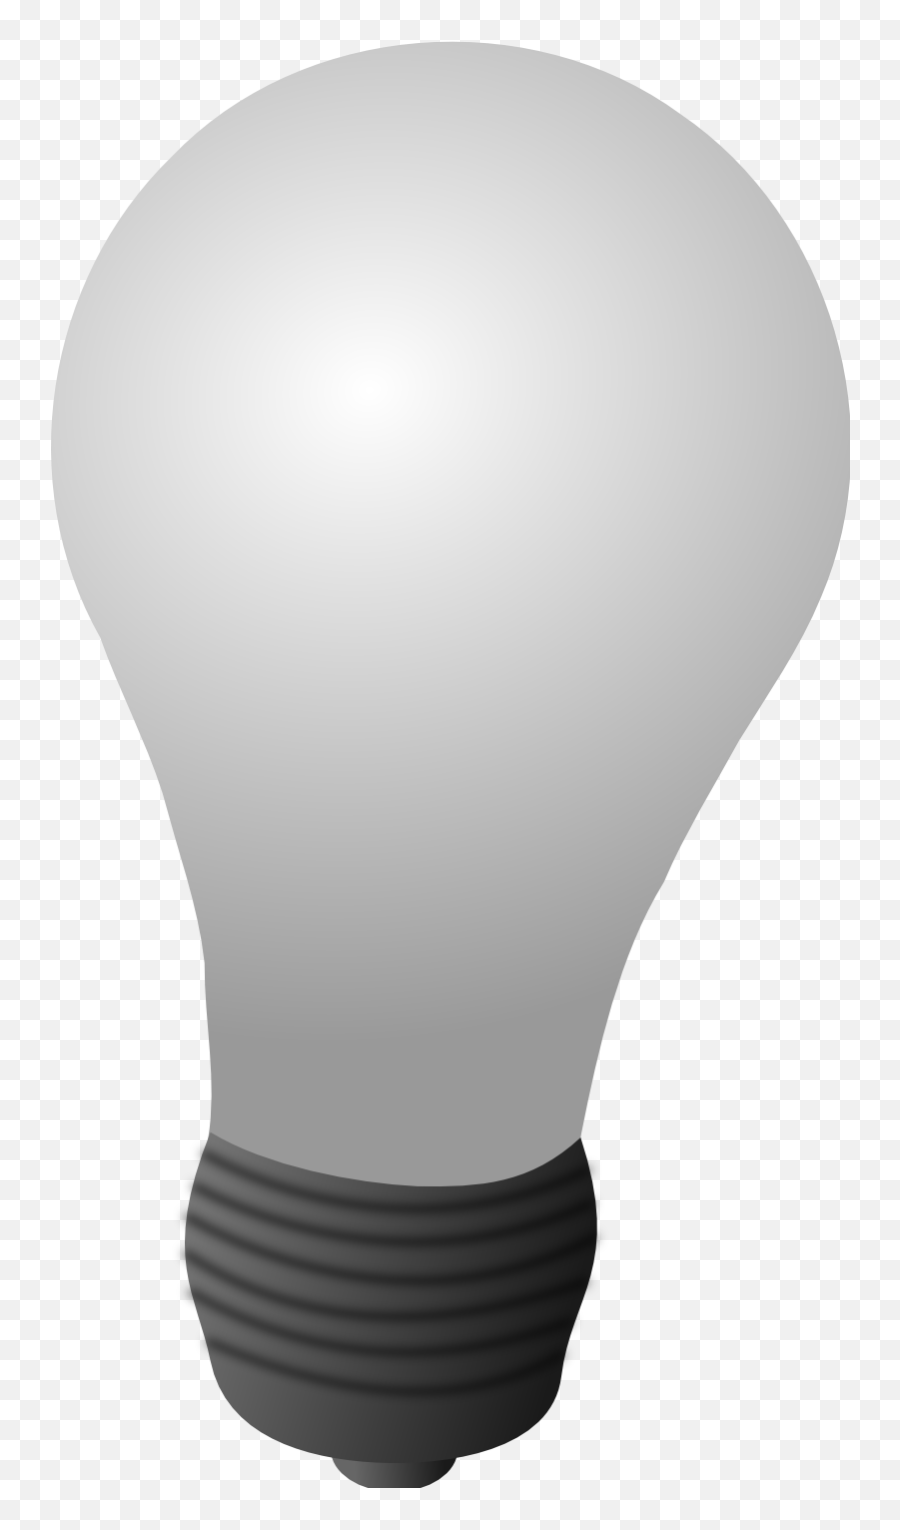 Free Light Bulb Png Transparent Images - Light Bulb Clip Art,Lightbulb Transparent Background